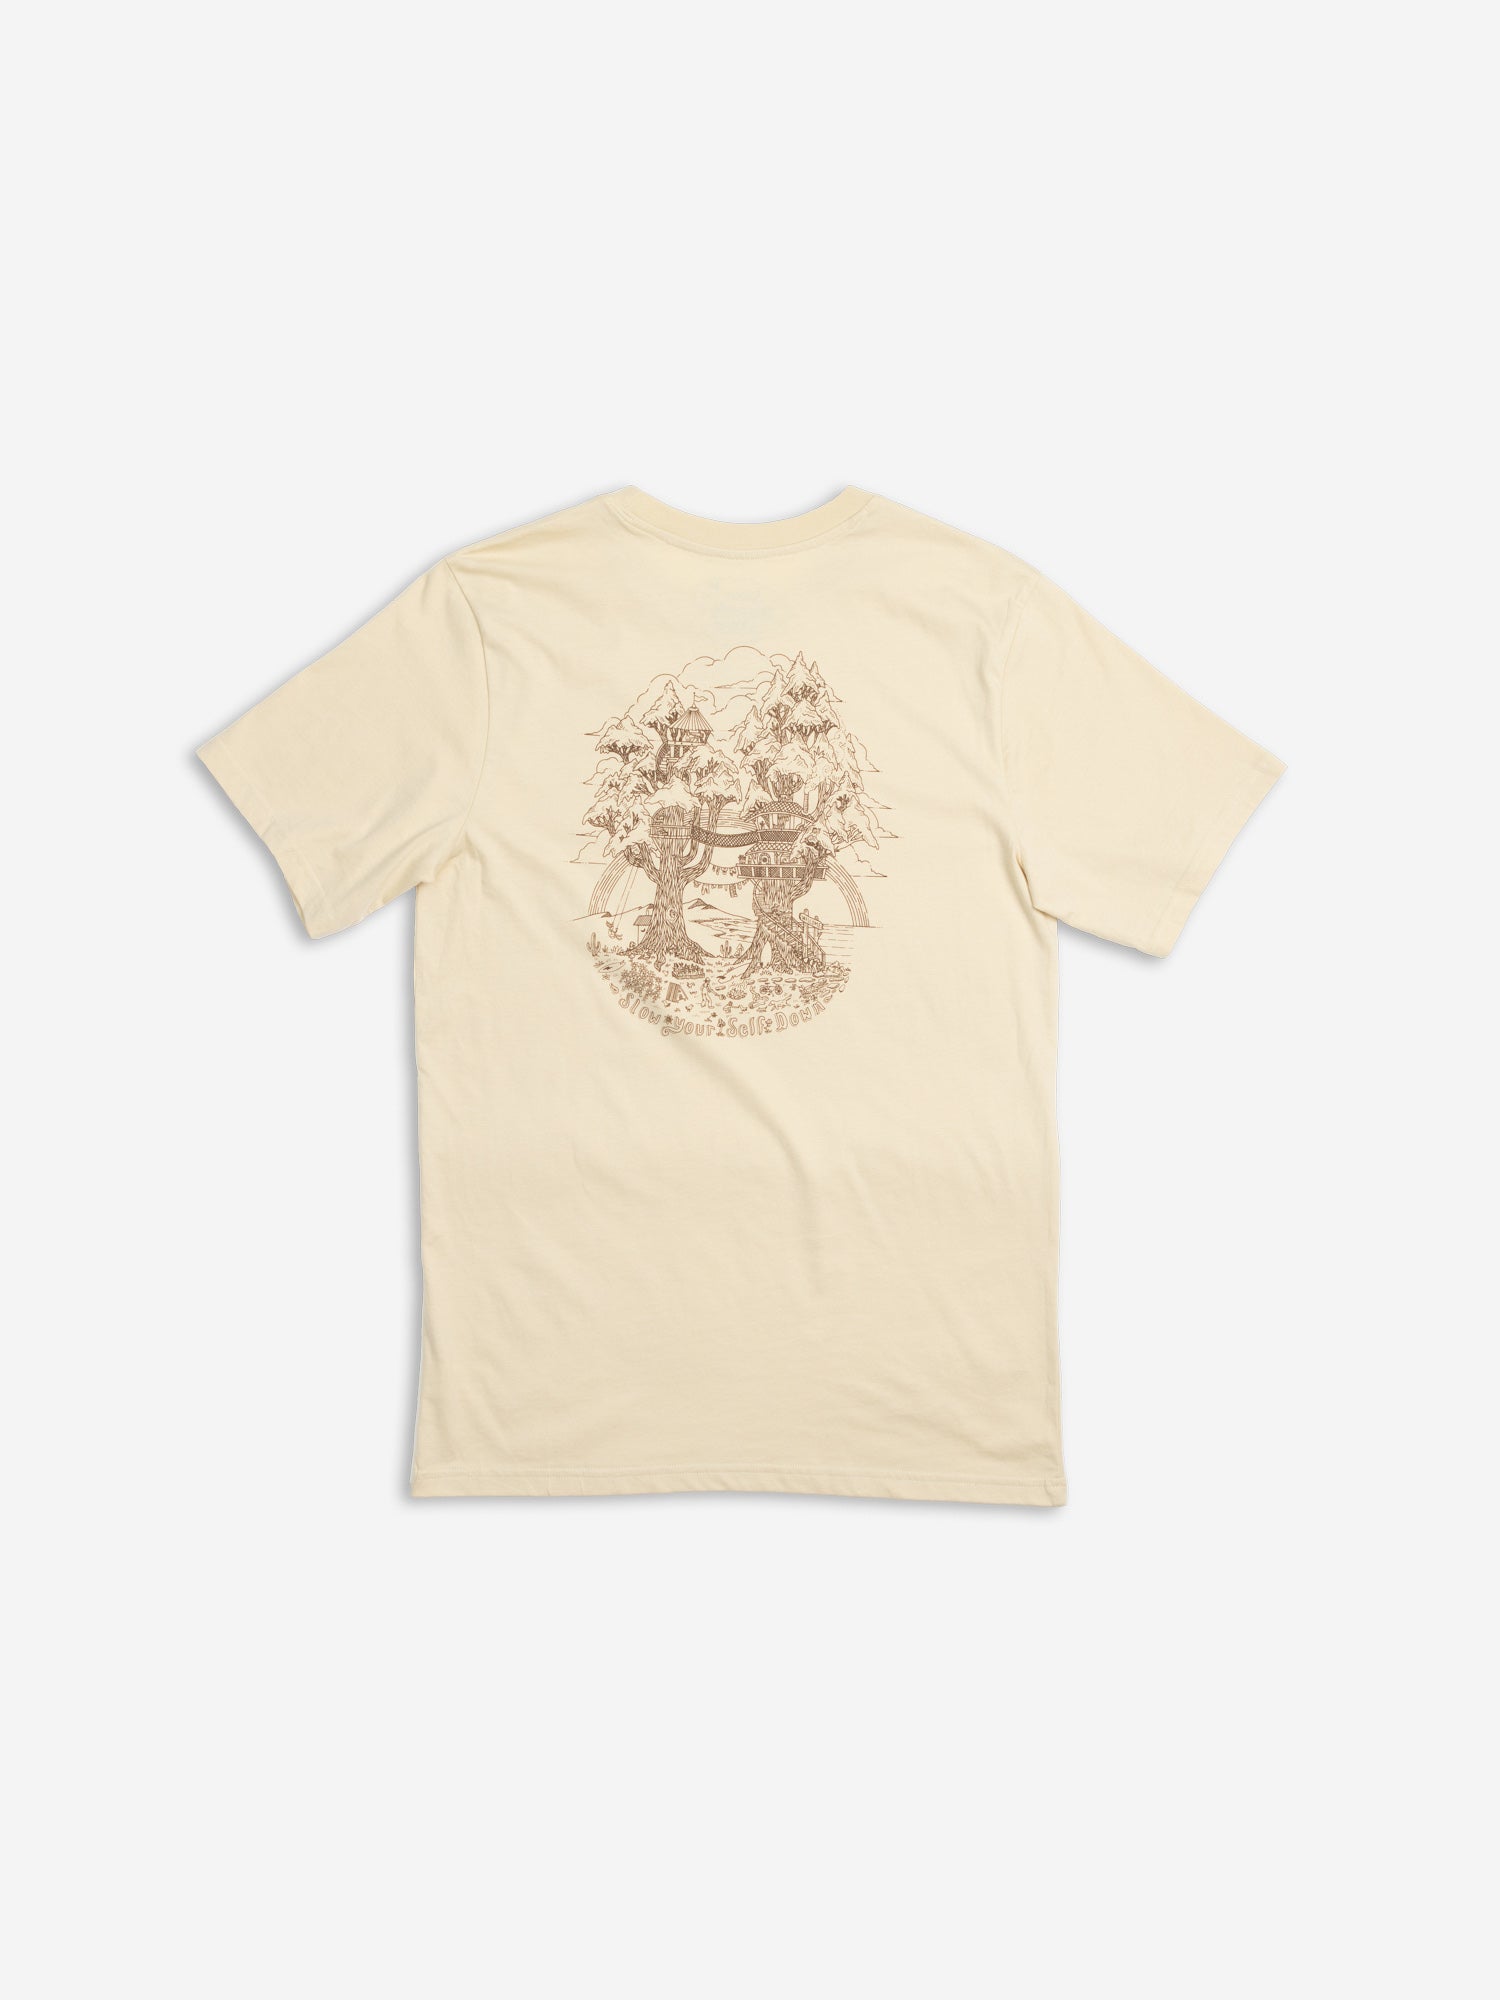 Tree House Tee Mens Shirts - Slow Yourself Down